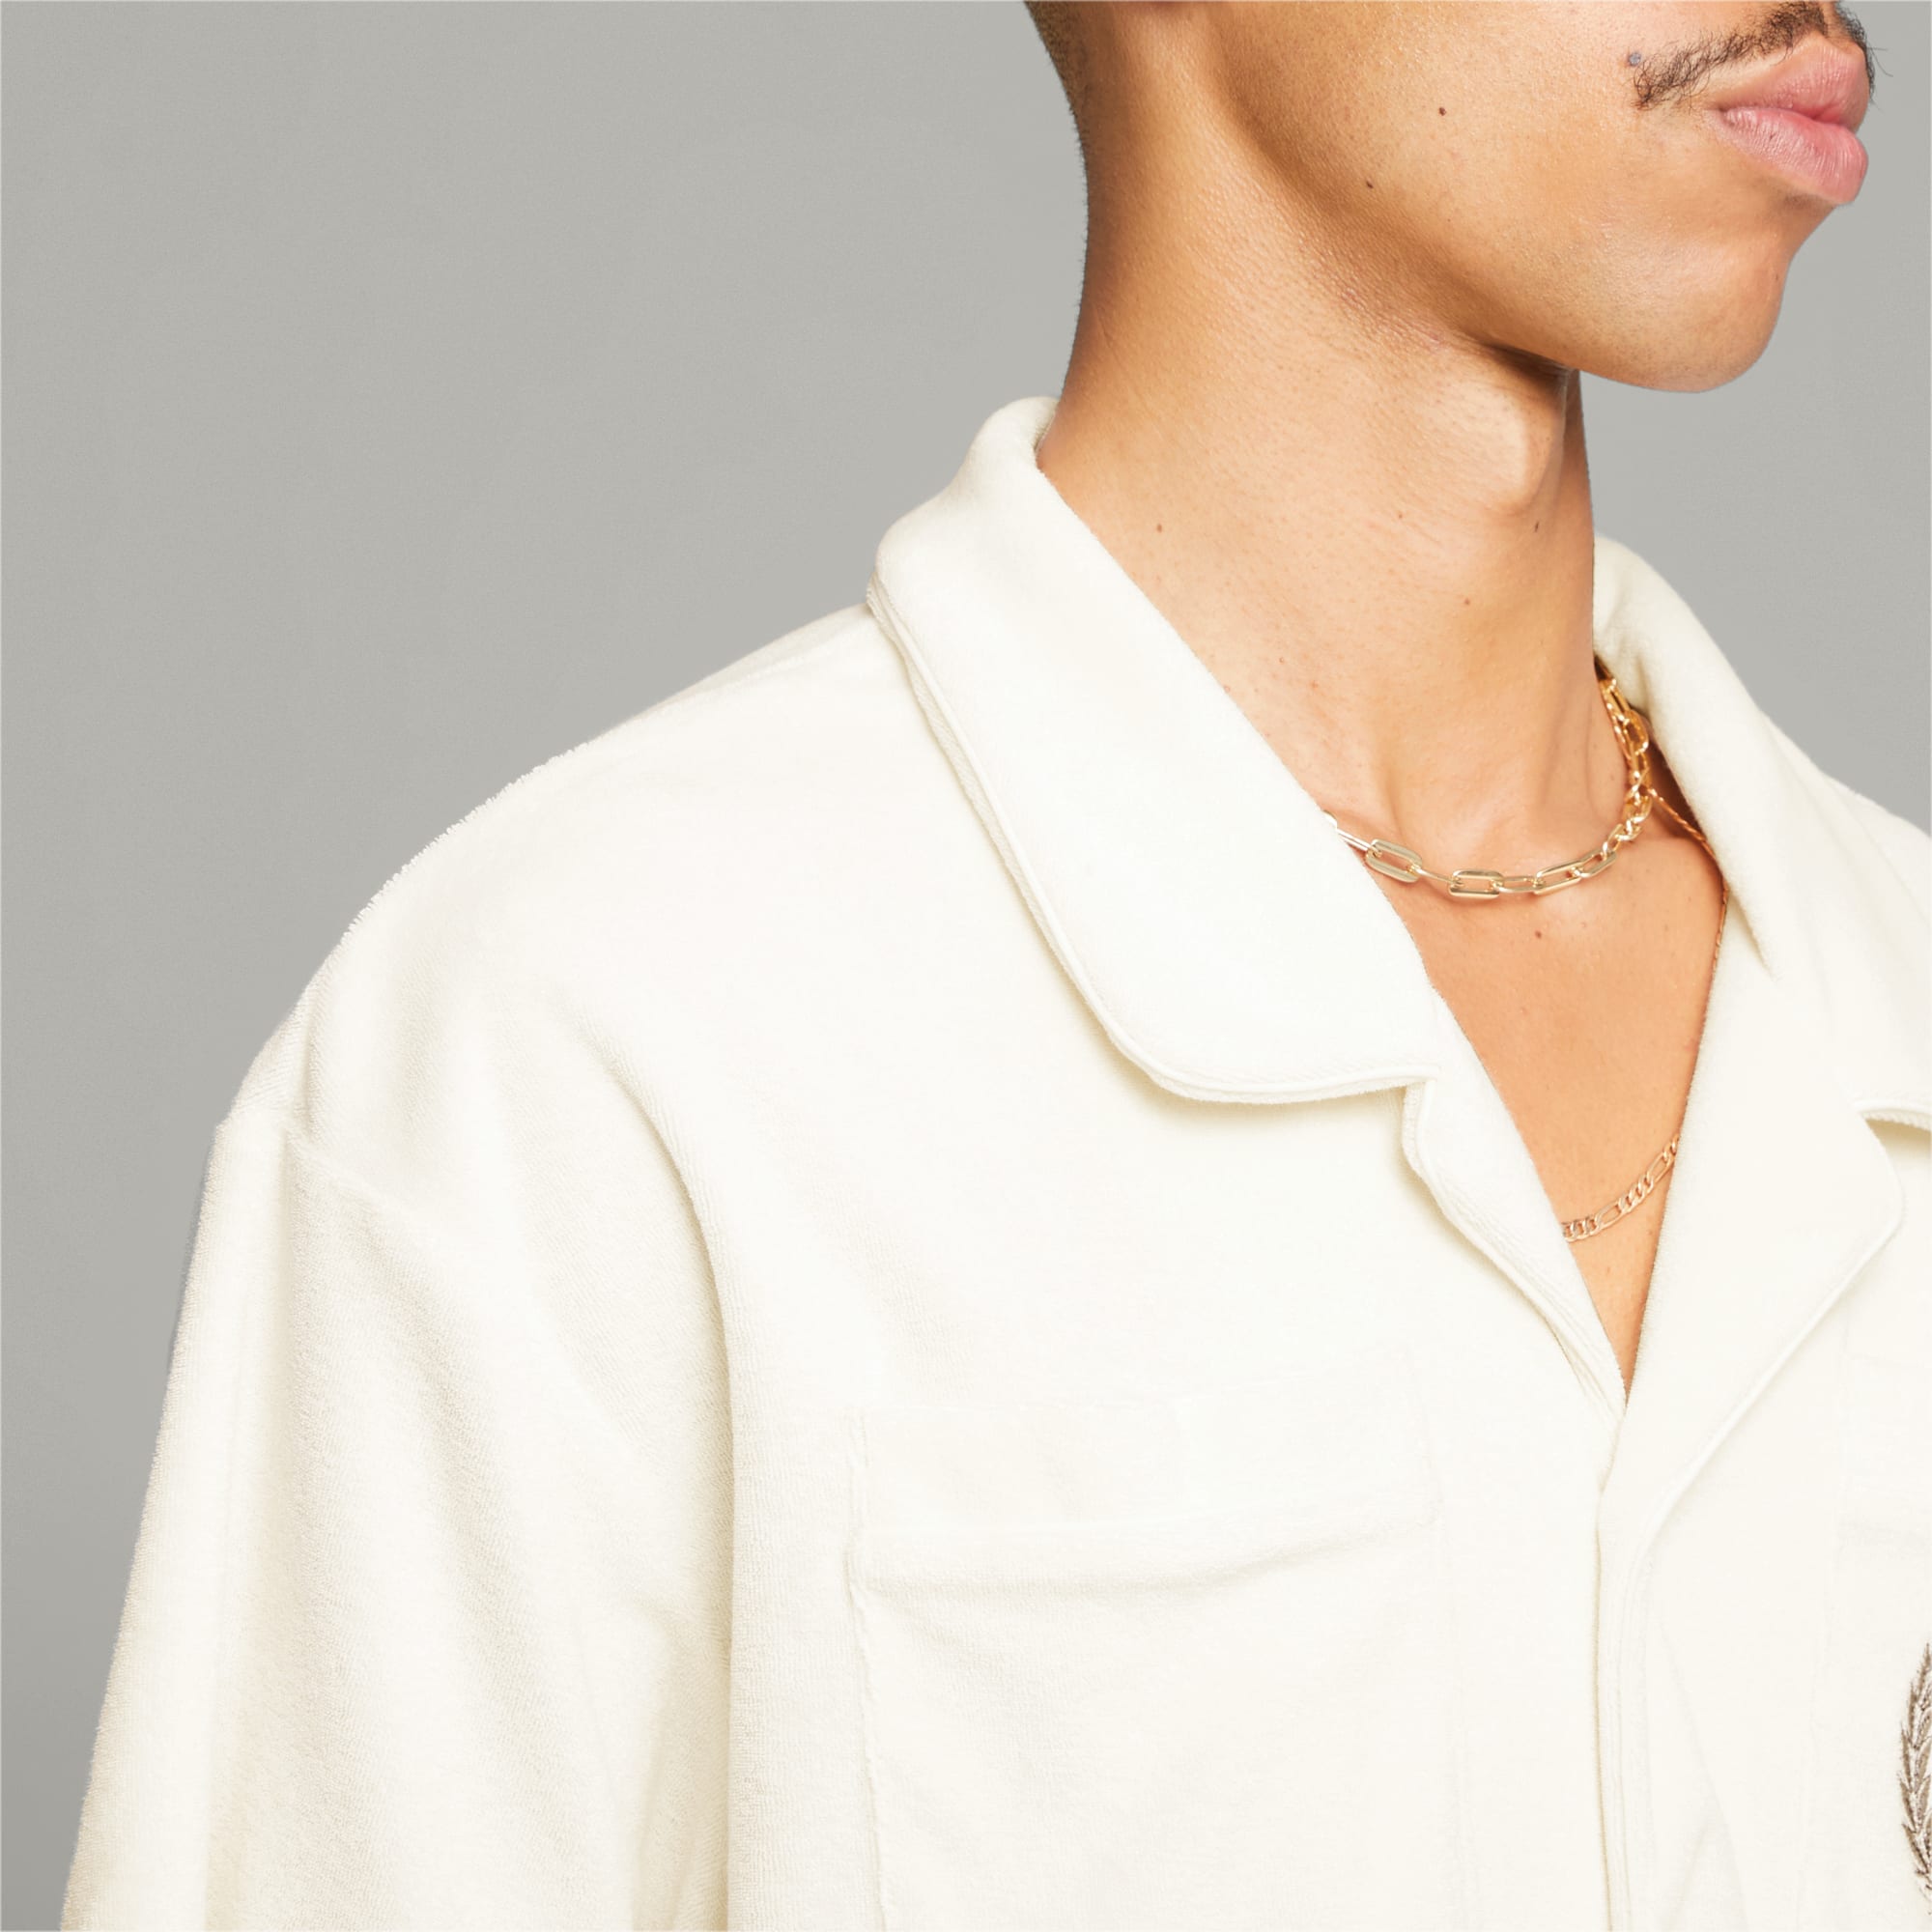 Men's PUMA X Rhuigi Shirt, Pristine, Size XS, Clothing